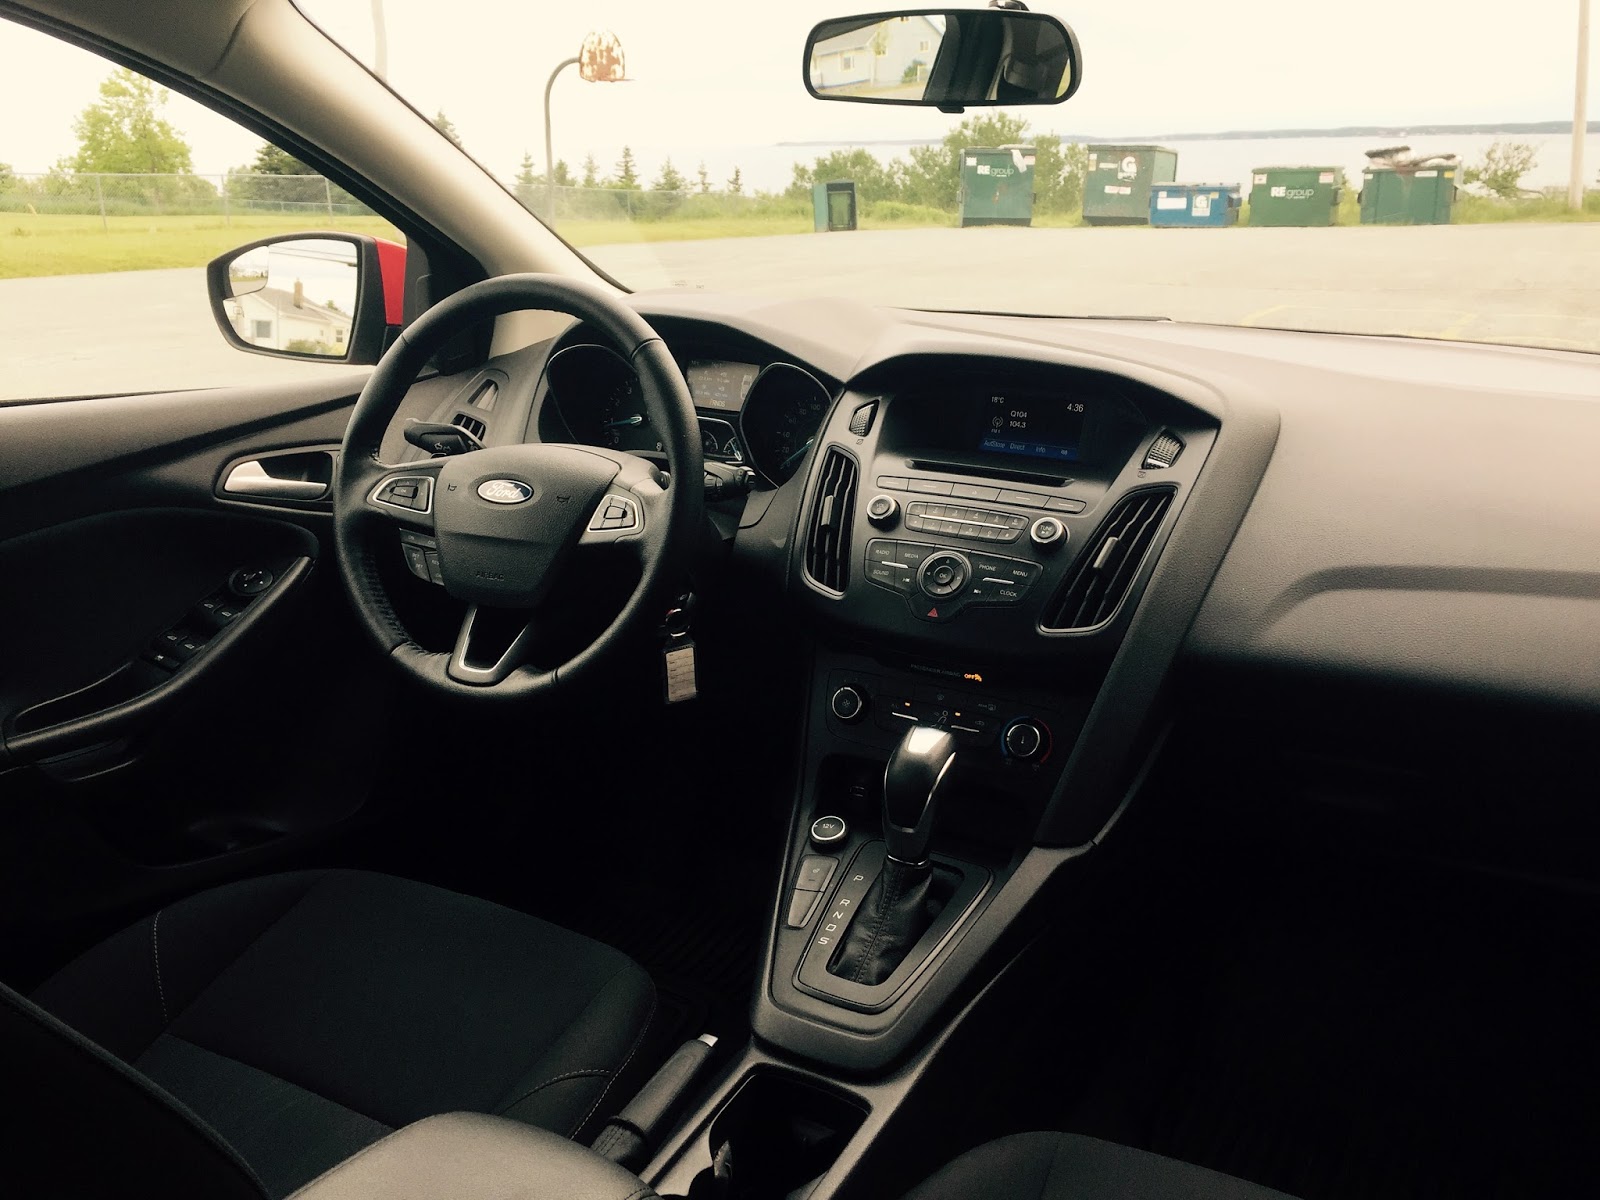 2016 Ford Focus Se Hatchback Interior - Ford Focus Review